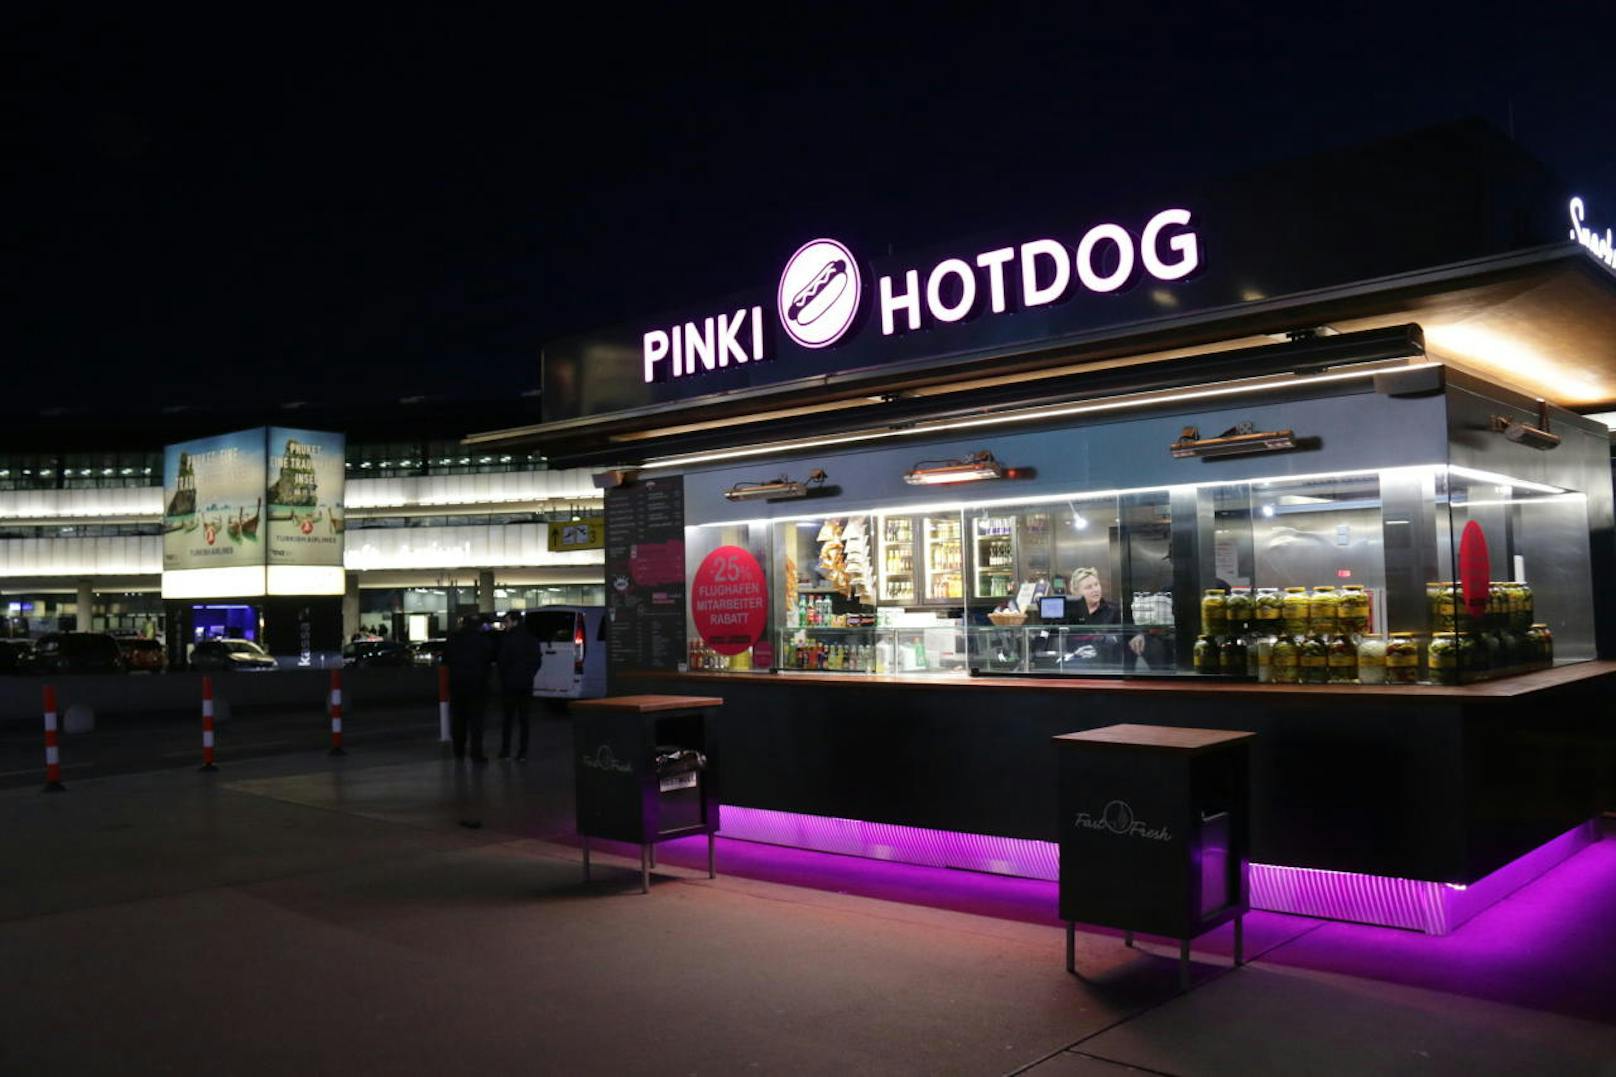 "Pinki Hot Dog"-Würstelstand